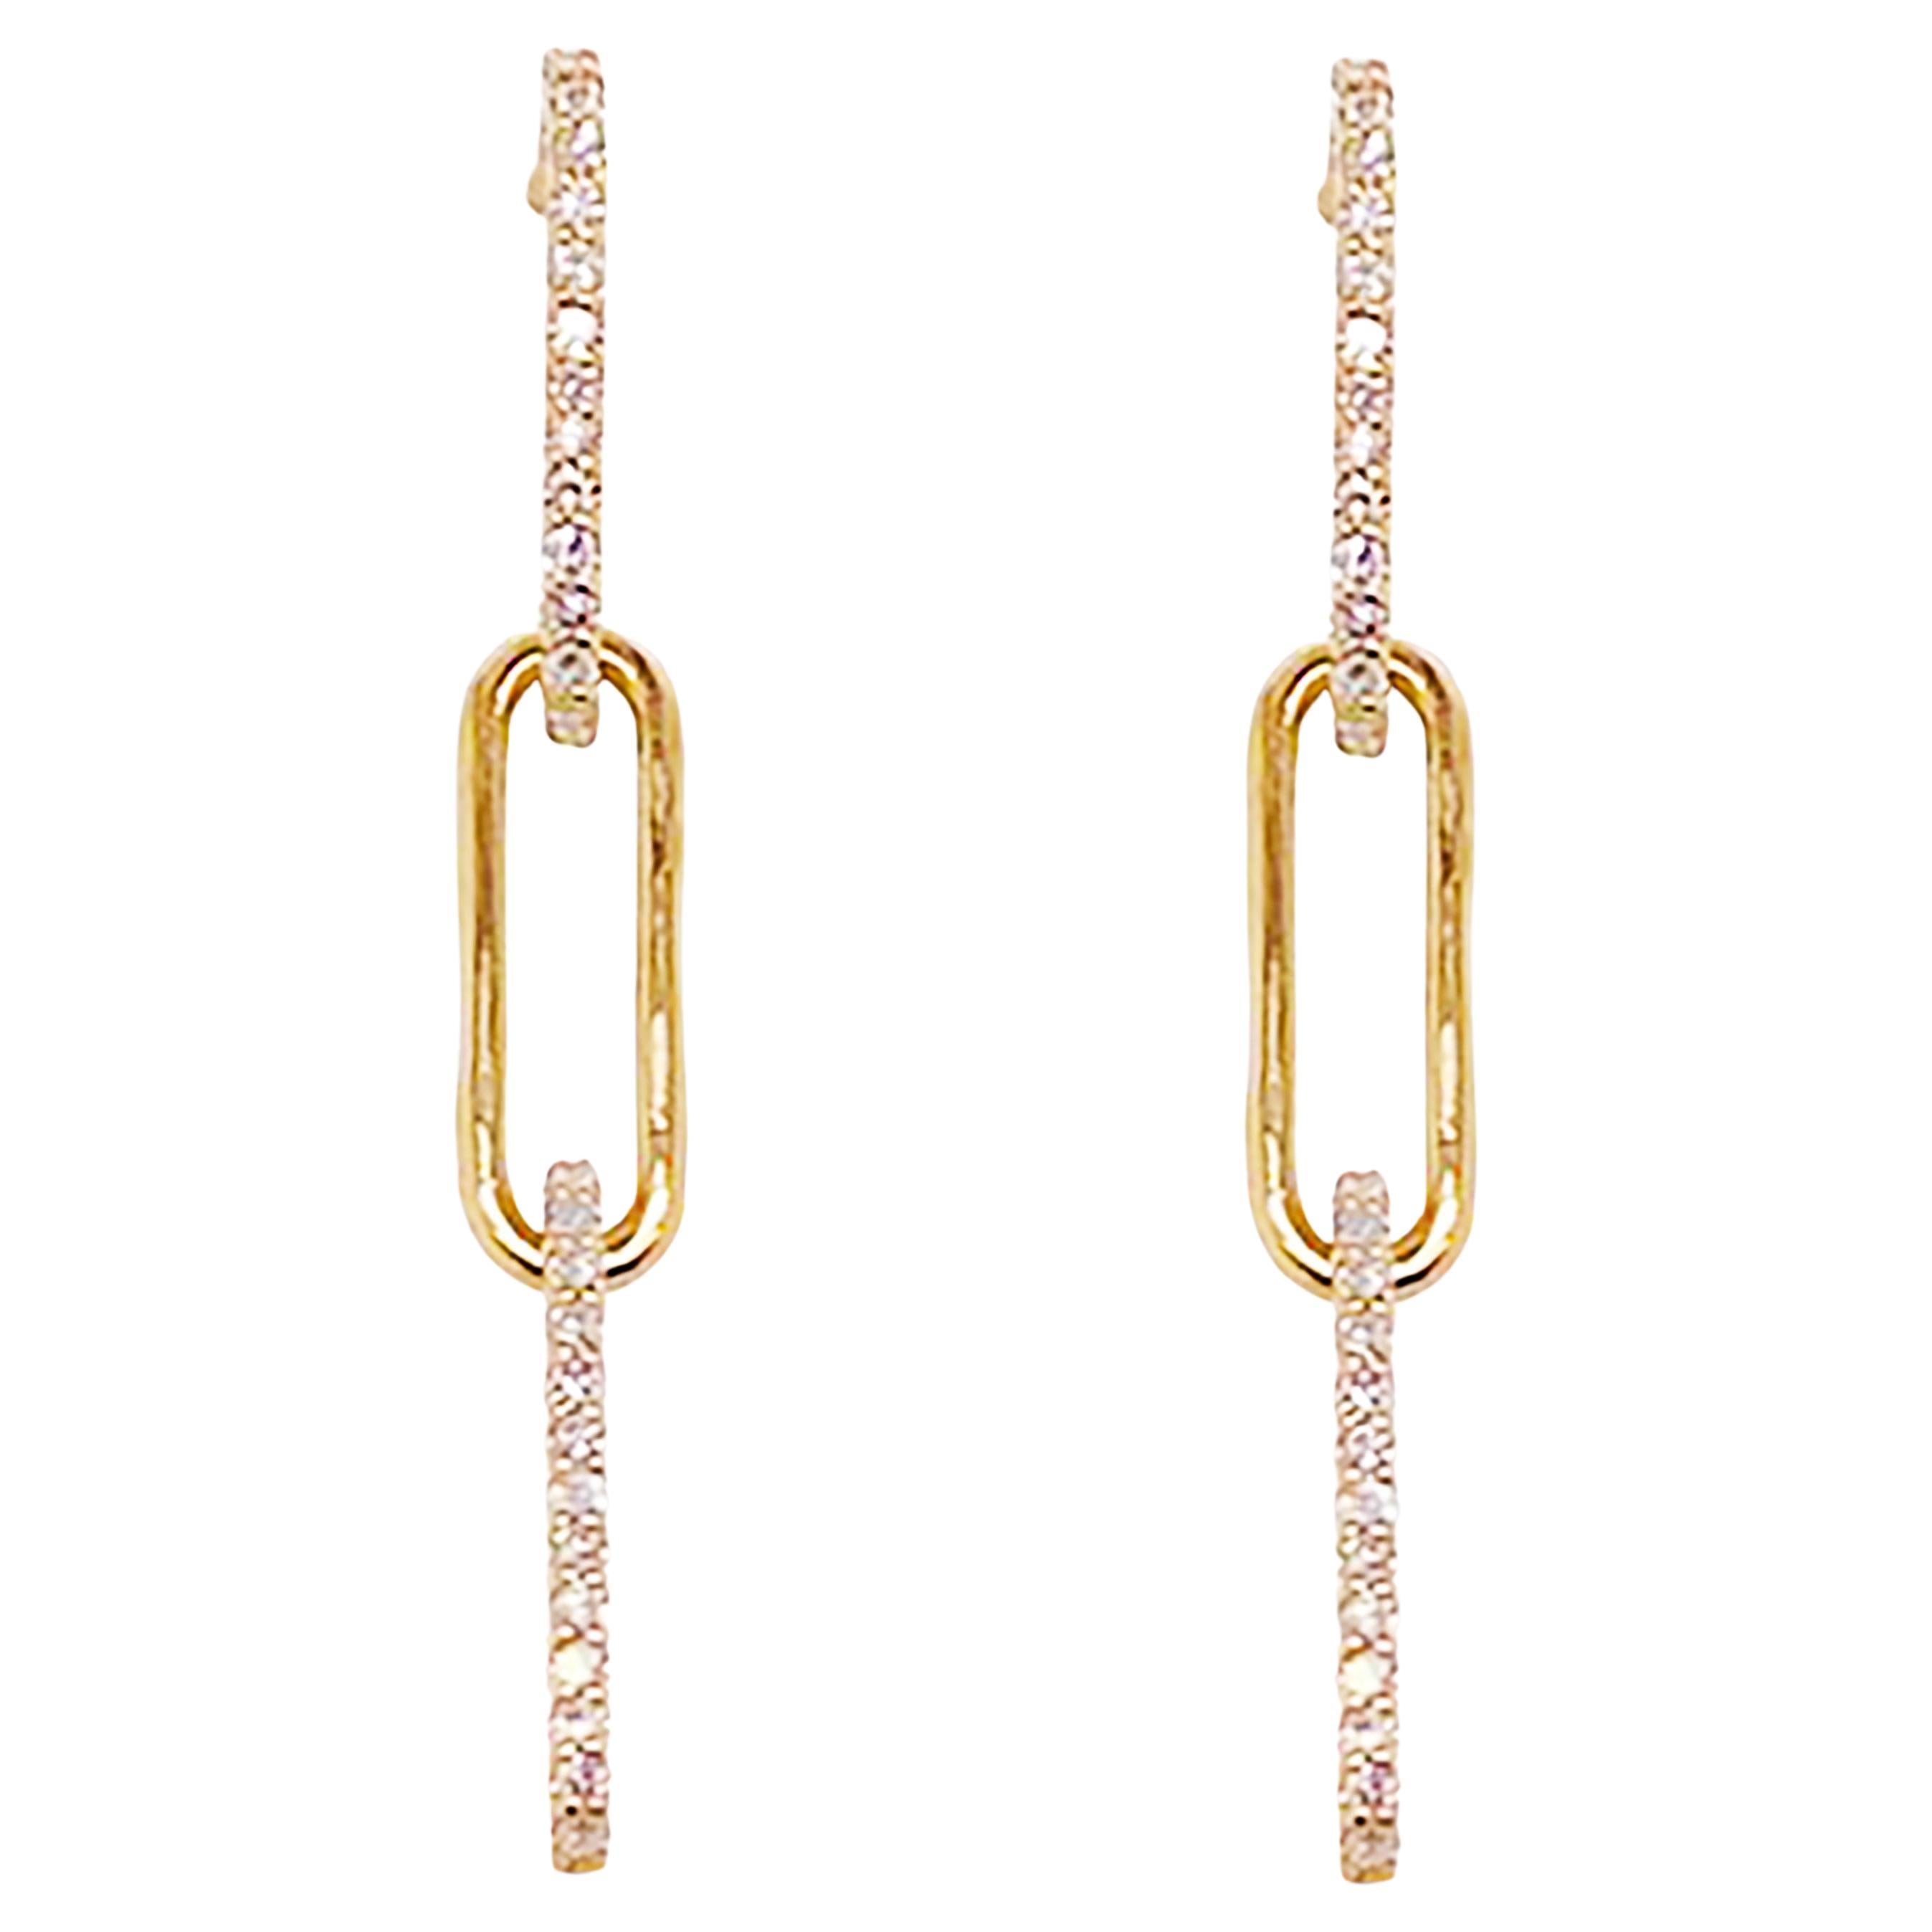 Sexy Diamond Paperclip Earrings 14K Gold .21 Carat Diamond Link Earring Dangles For Sale